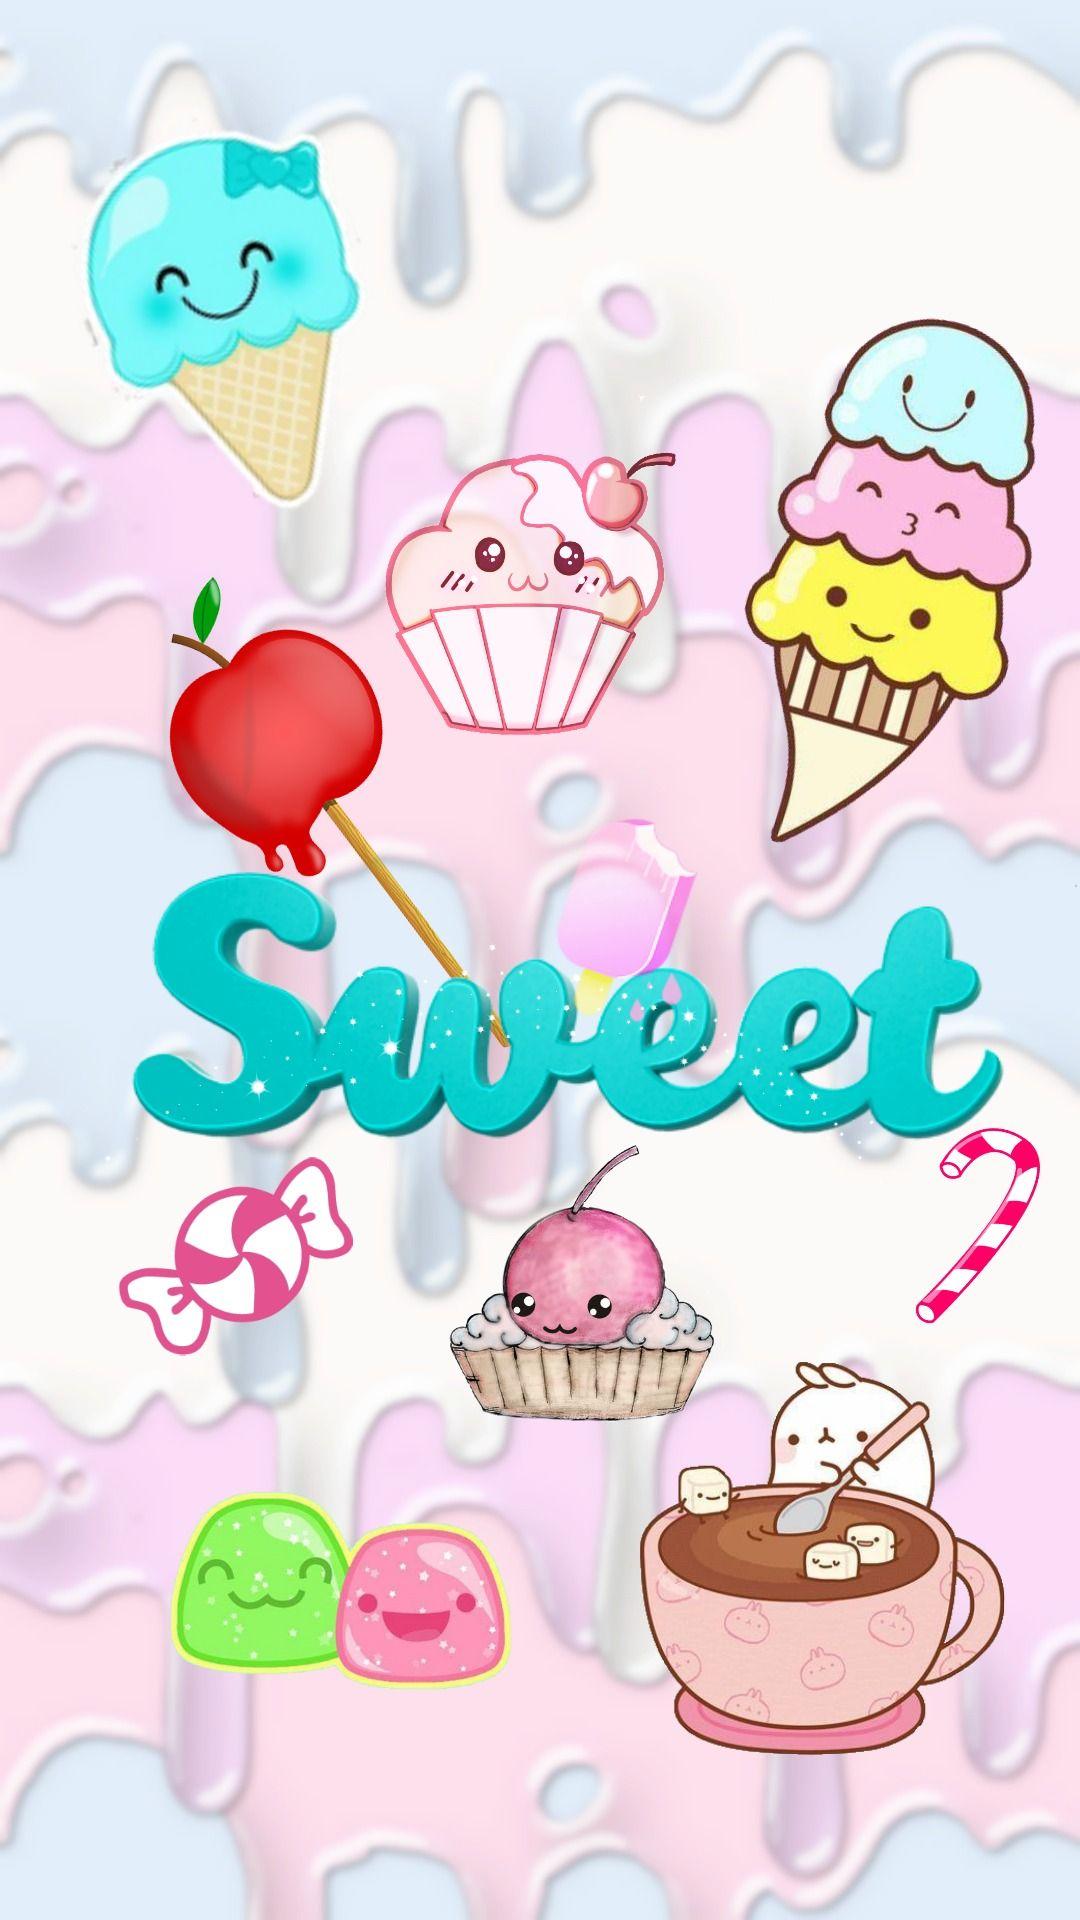 Sweet Cute Wallpaper For Phone Cute Wallpaper For iPhone